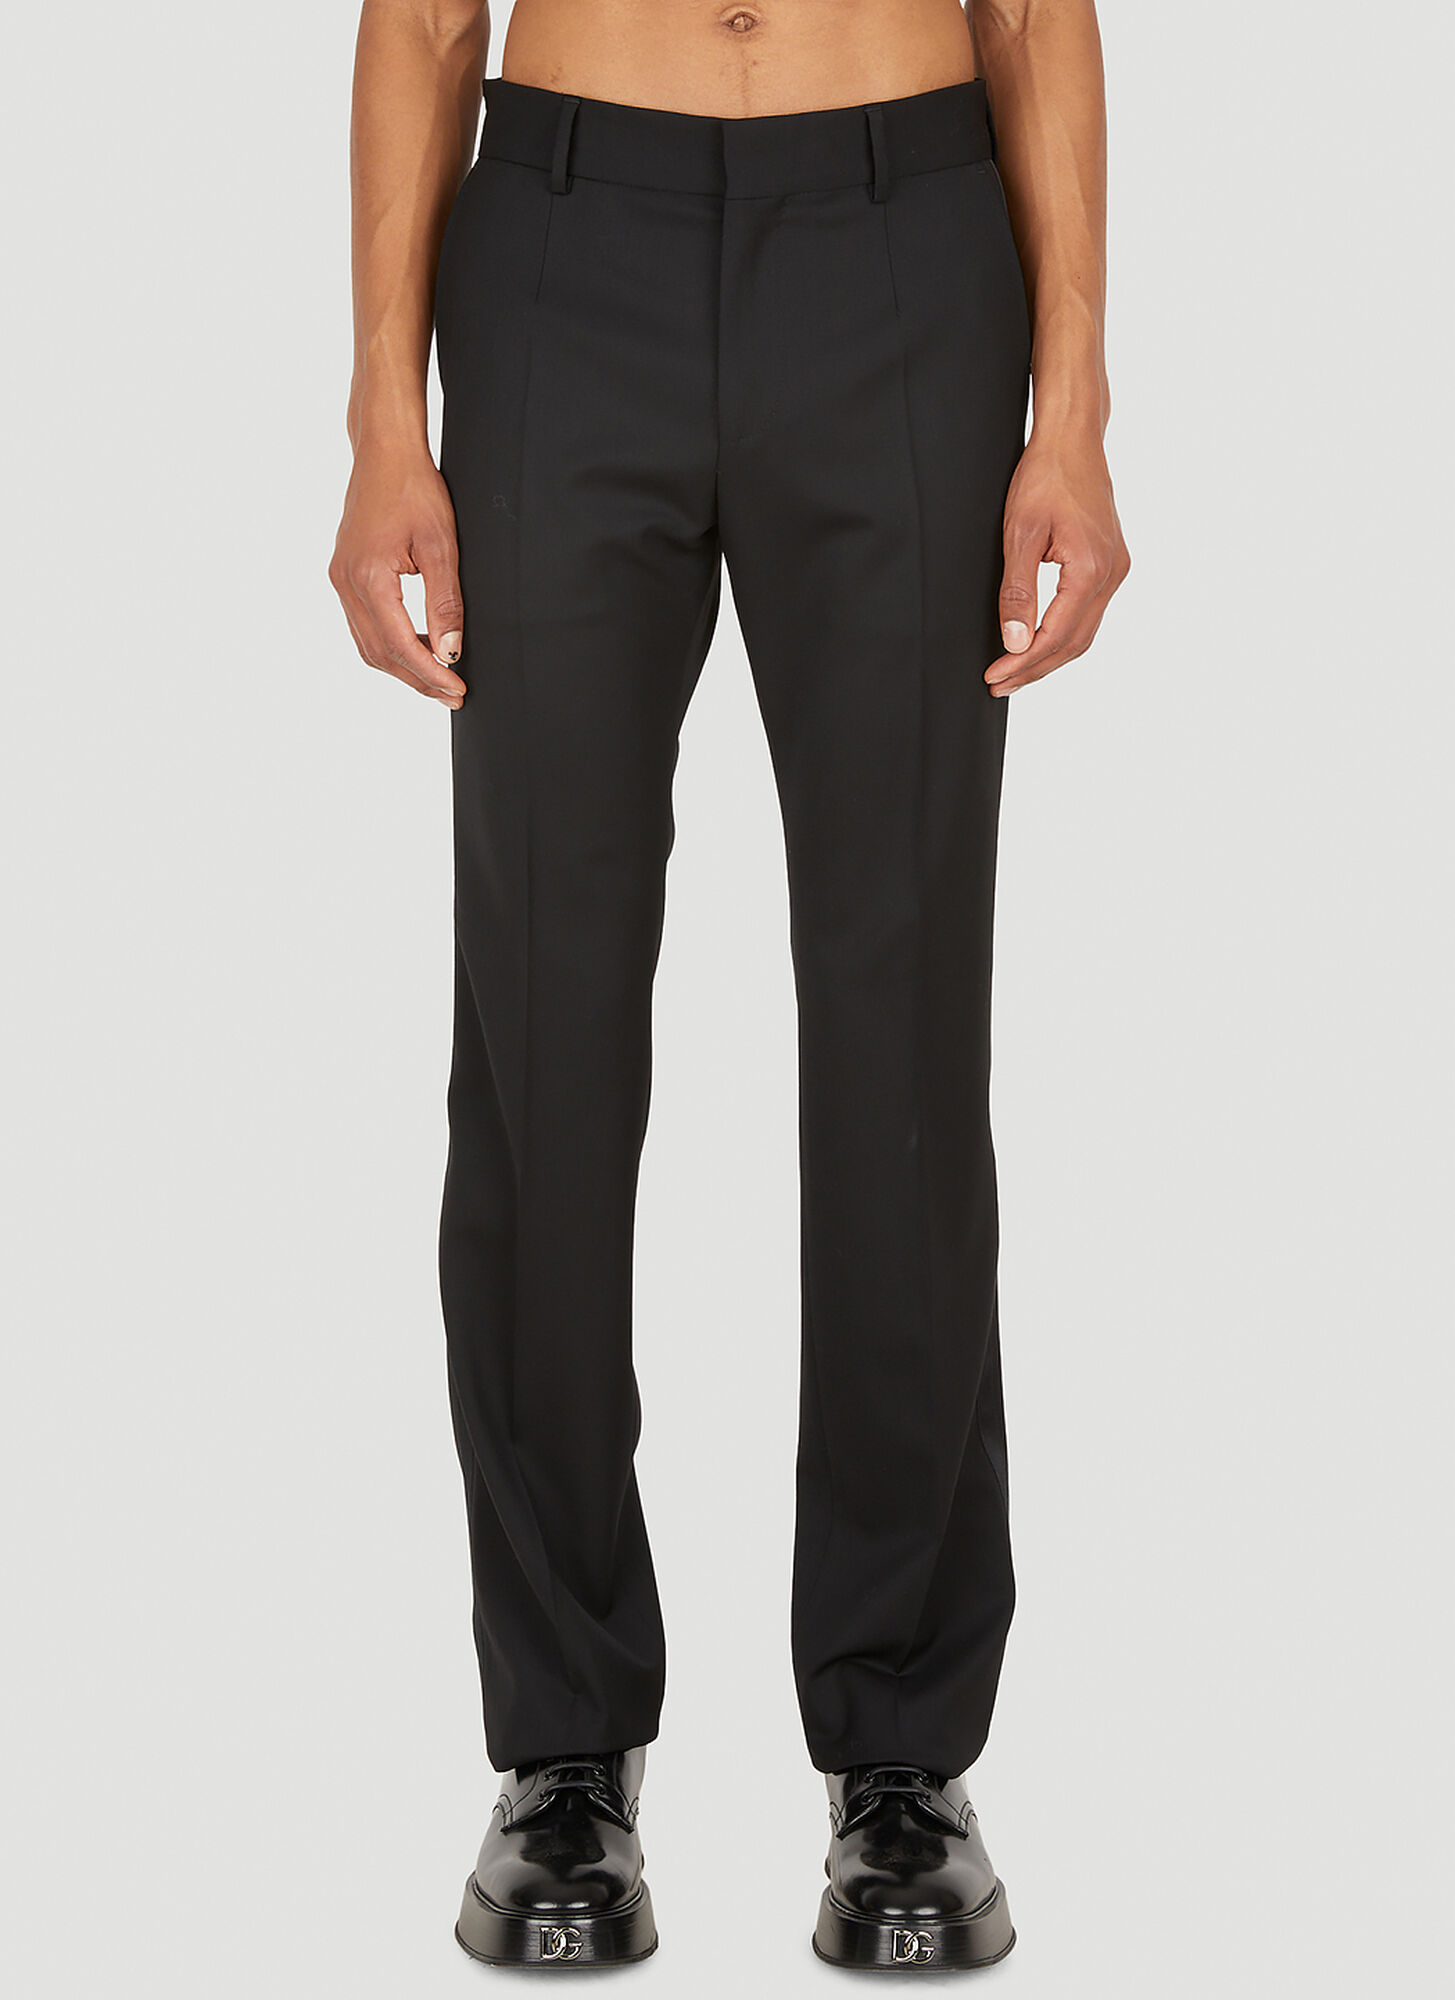 Dolce & Gabbana Satin Trimmed Tuxedo Suit Trousers